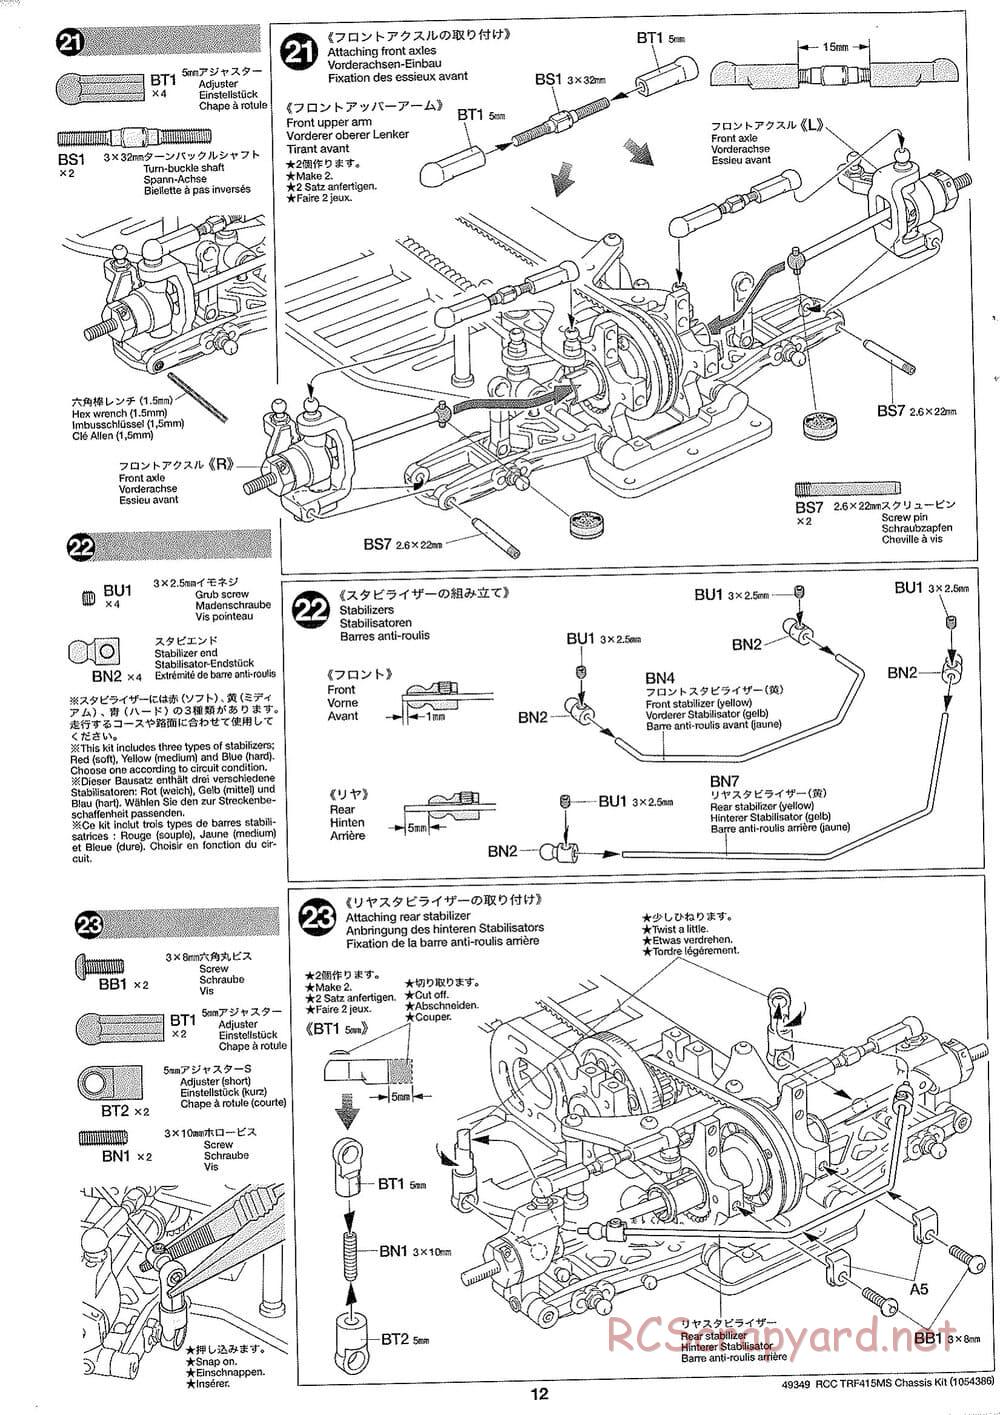 Tamiya - TRF415-MS Chassis - Manual - Page 12